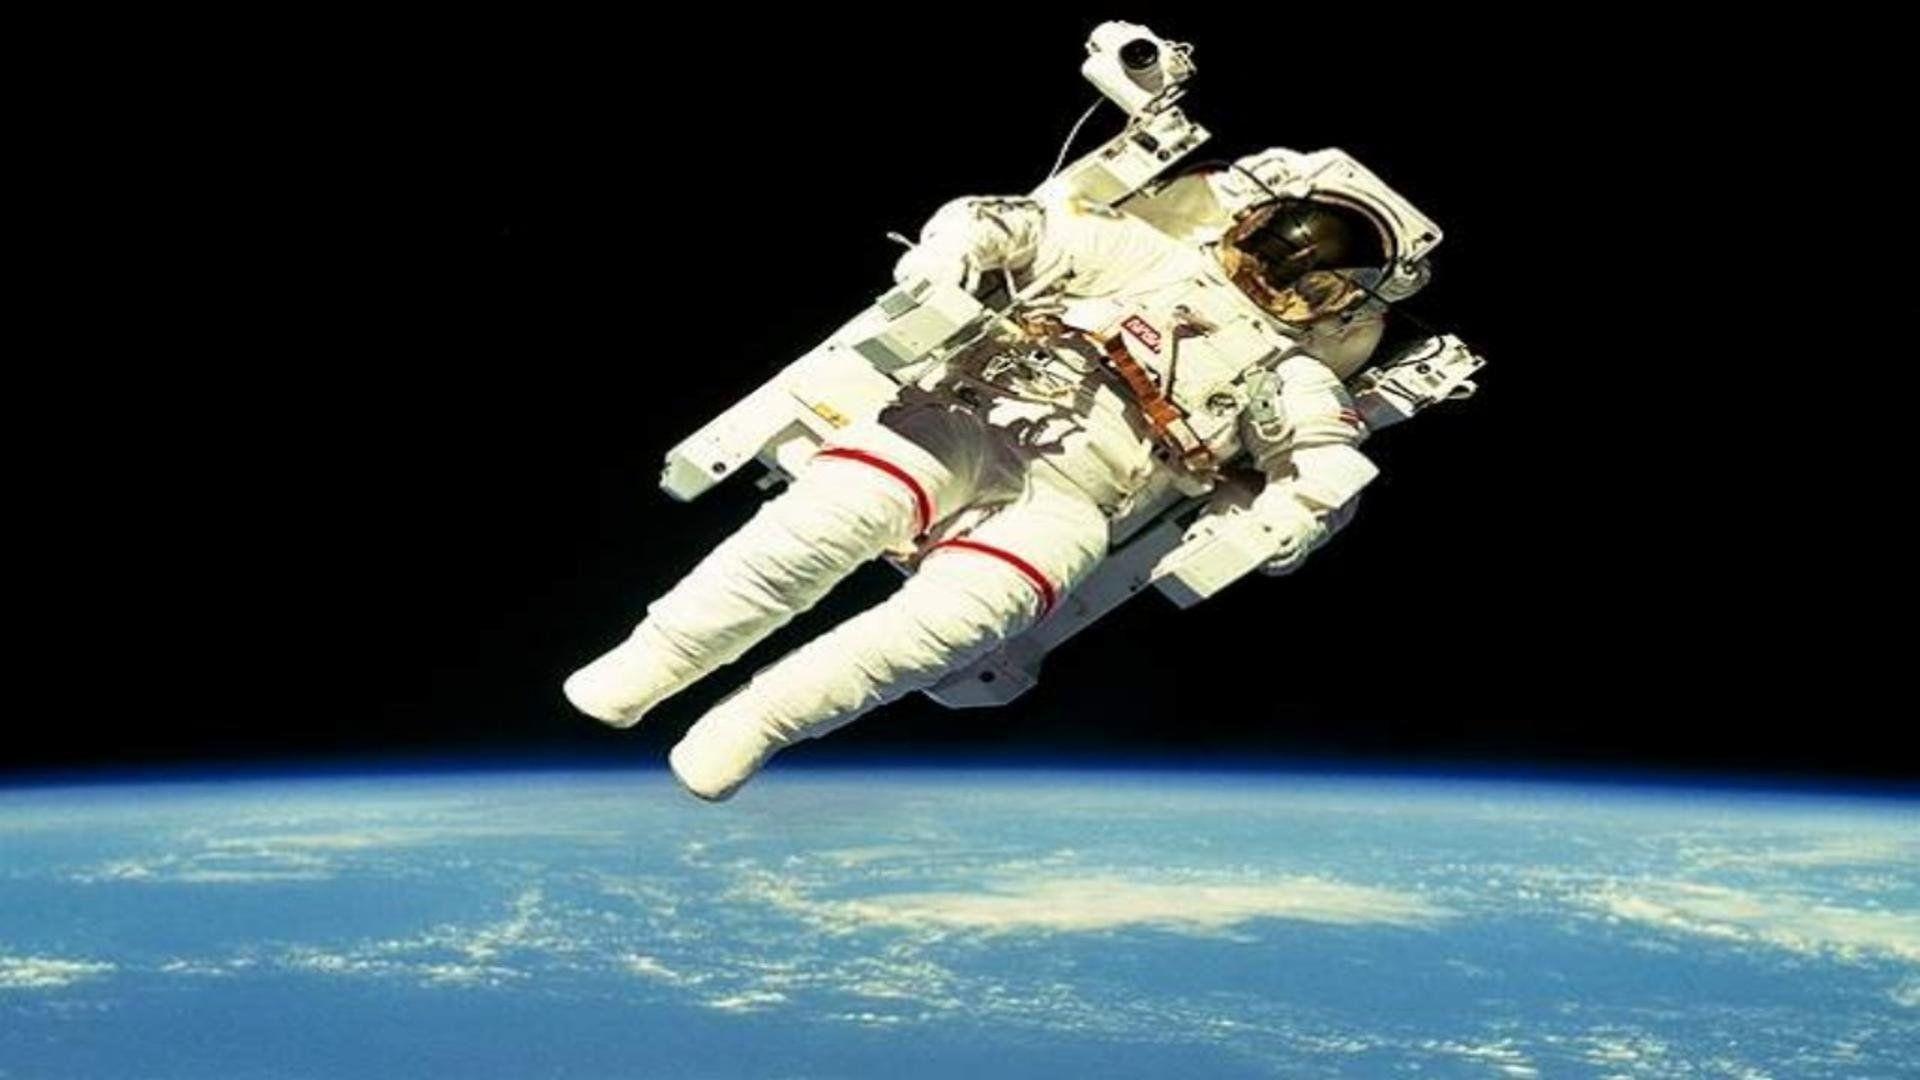 Astronaut On The Moon Wallpaper, Full HD 1080p, Best HD Astronaut